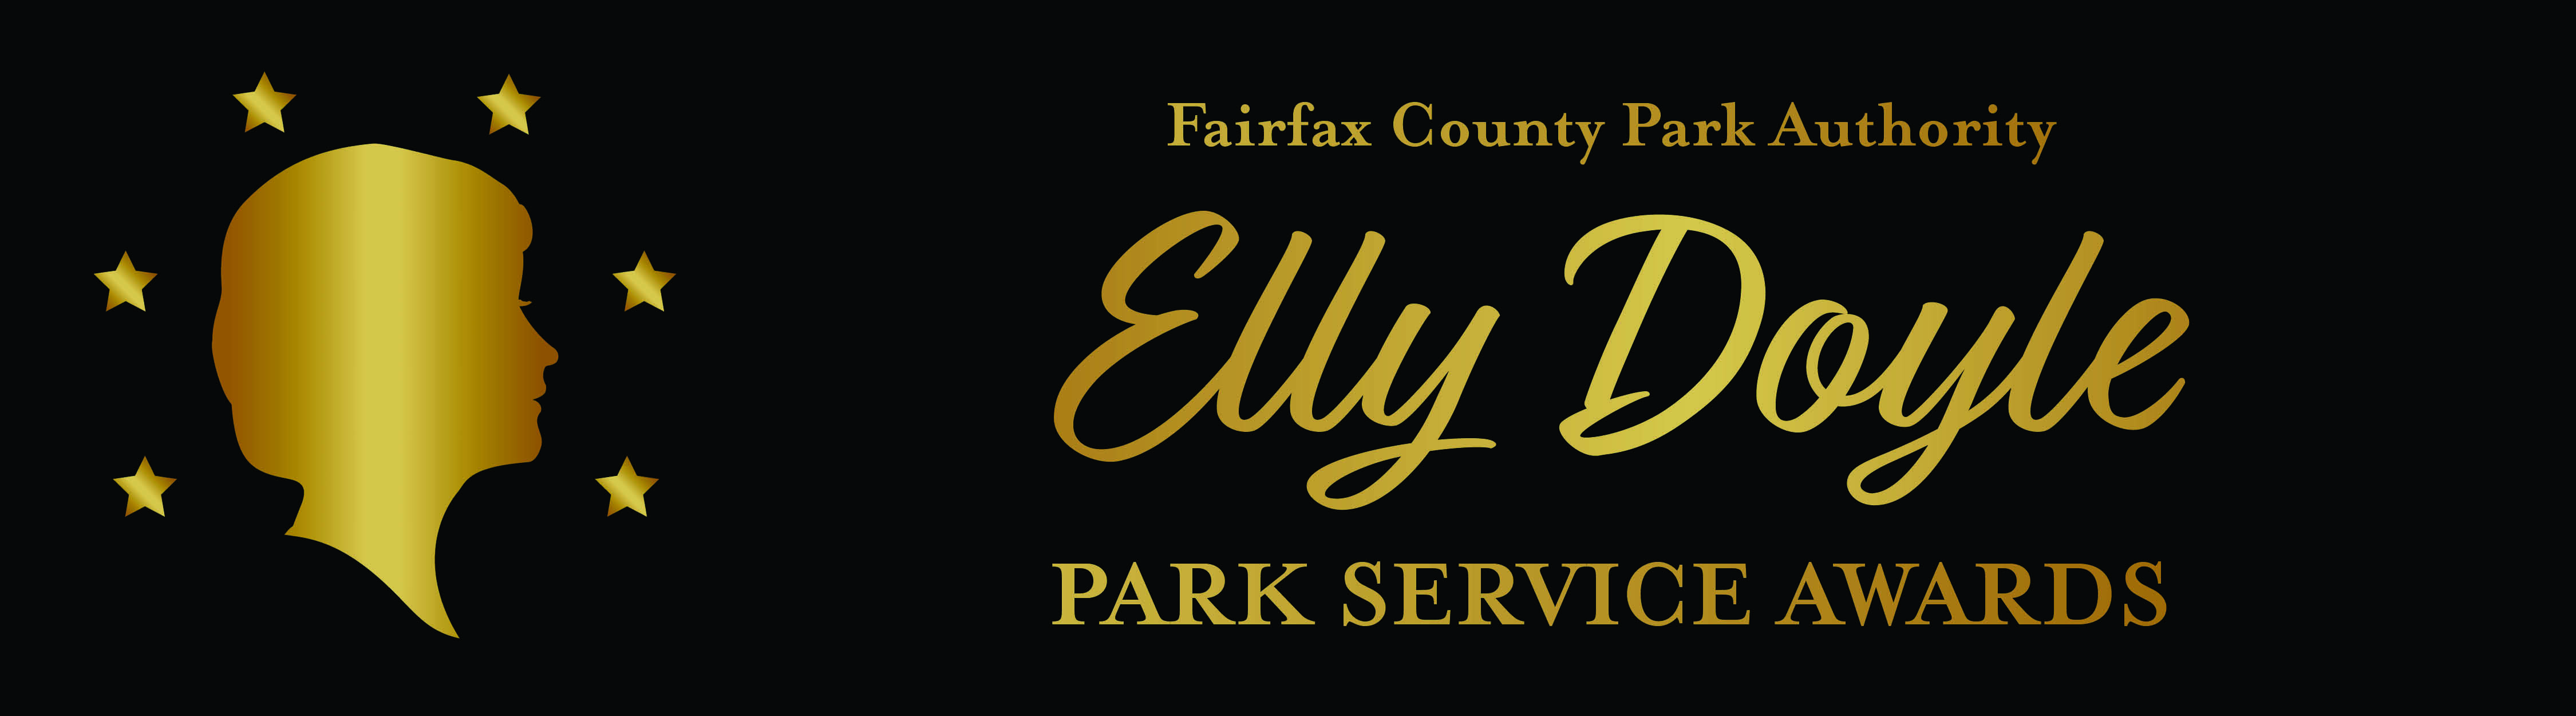 Elly Doyle Park Service Awards 